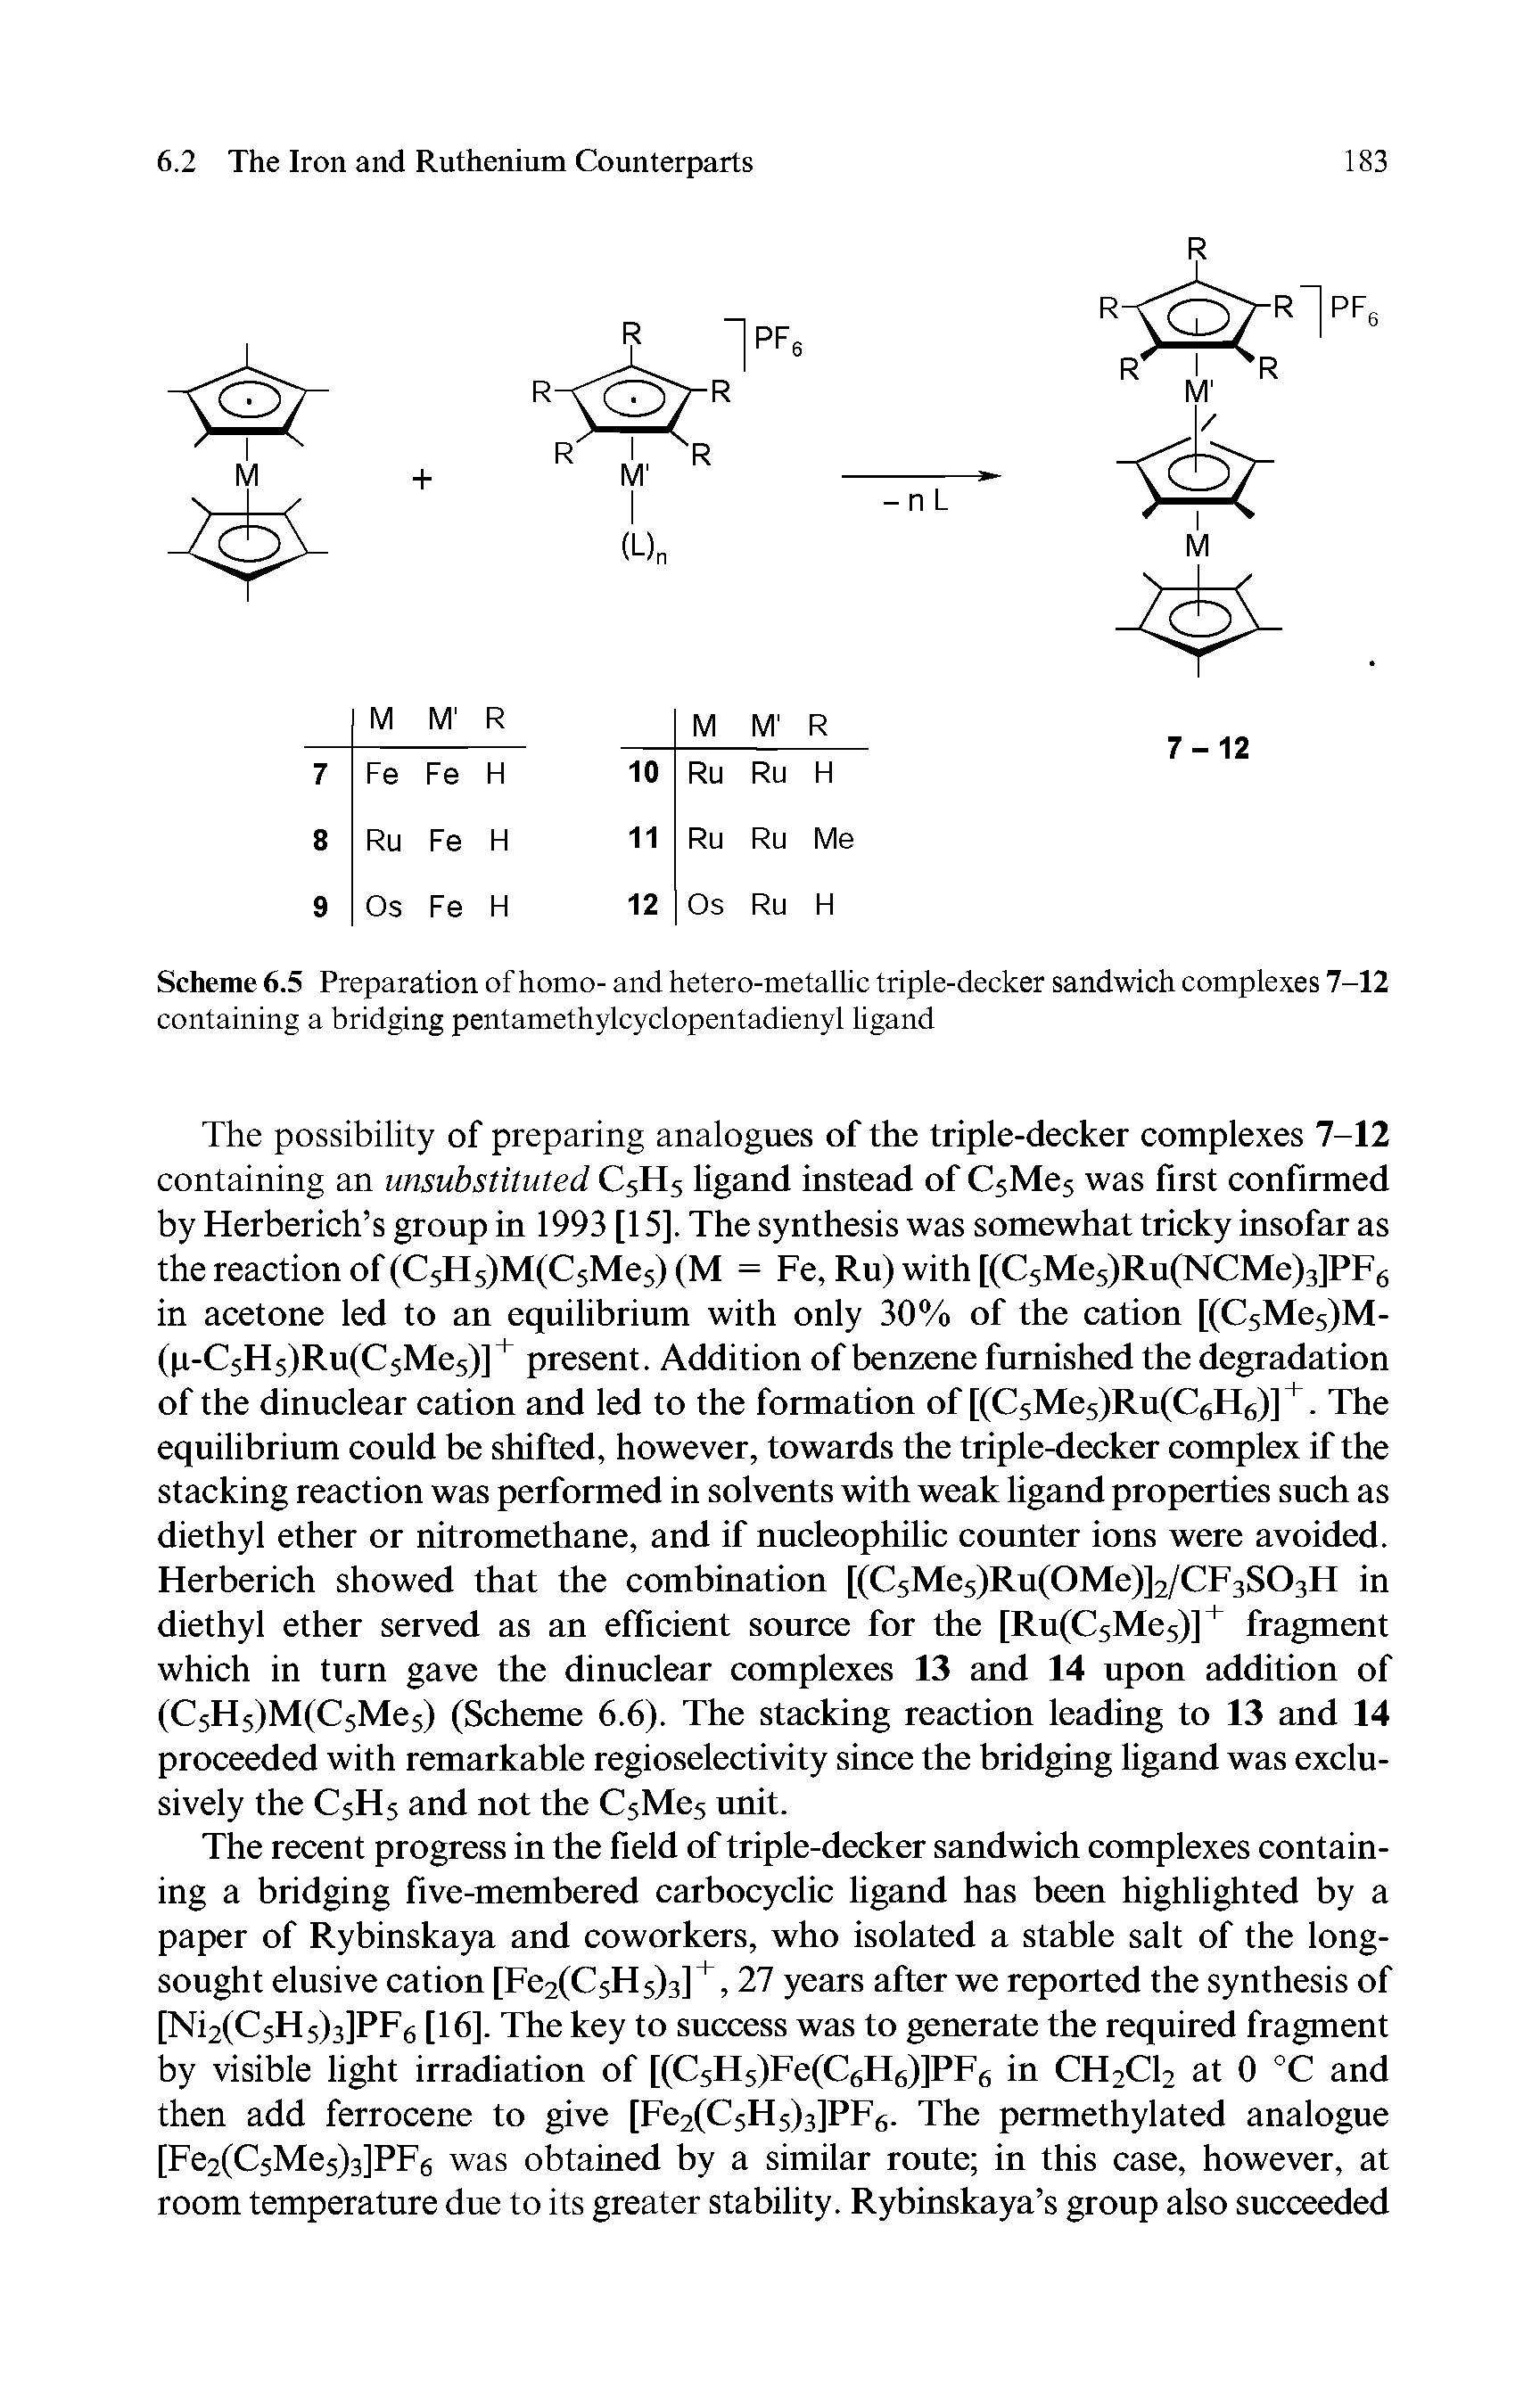 Scheme 6.5 Preparation of homo- and hetero-metallic triple-decker sandwich complexes 7-12 containing a bridging pentamethylcyclopentadienyl ligand...